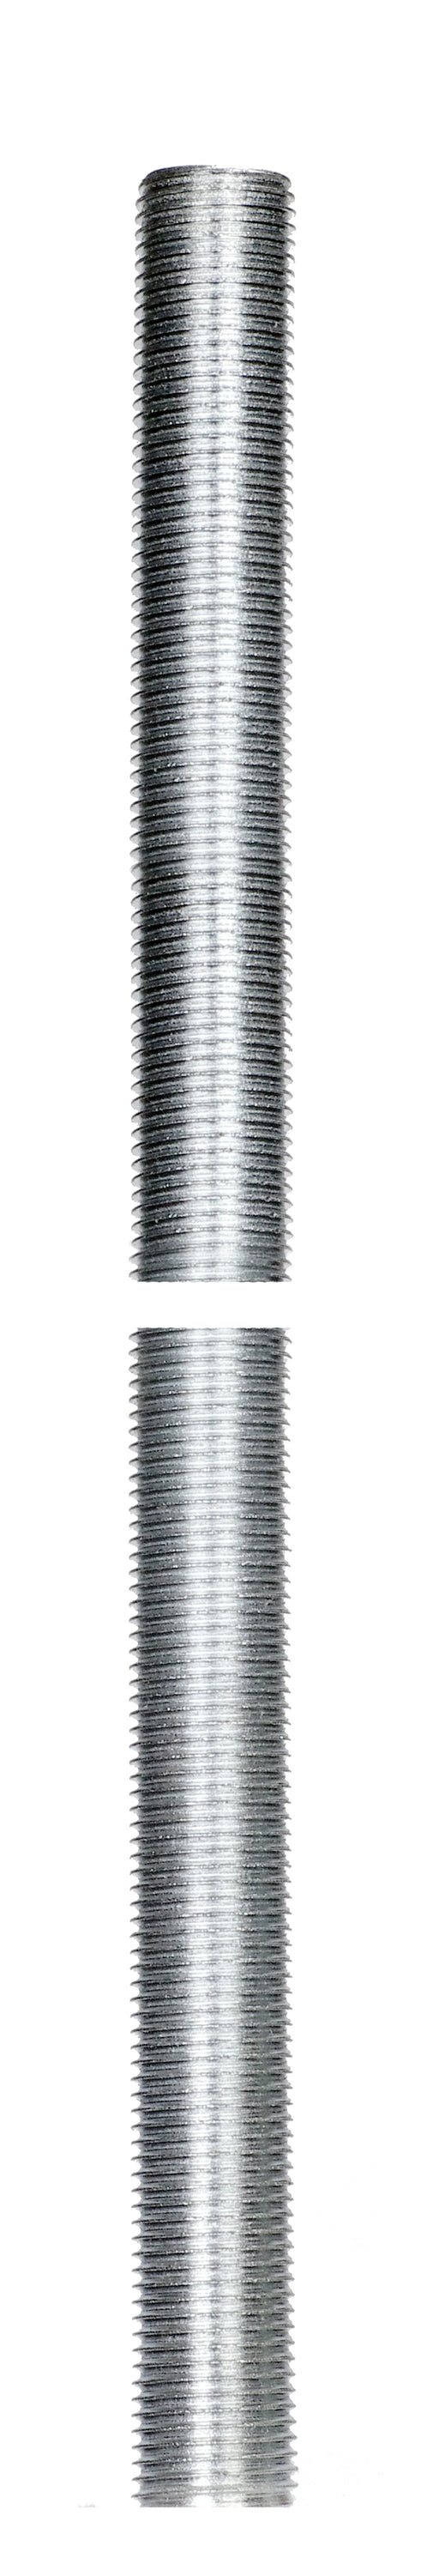 SATCO/NUVO 1/8 IP Steel Nipple Zinc Plated 16 Inch Length 3/8 Inch Wide (90-2105)